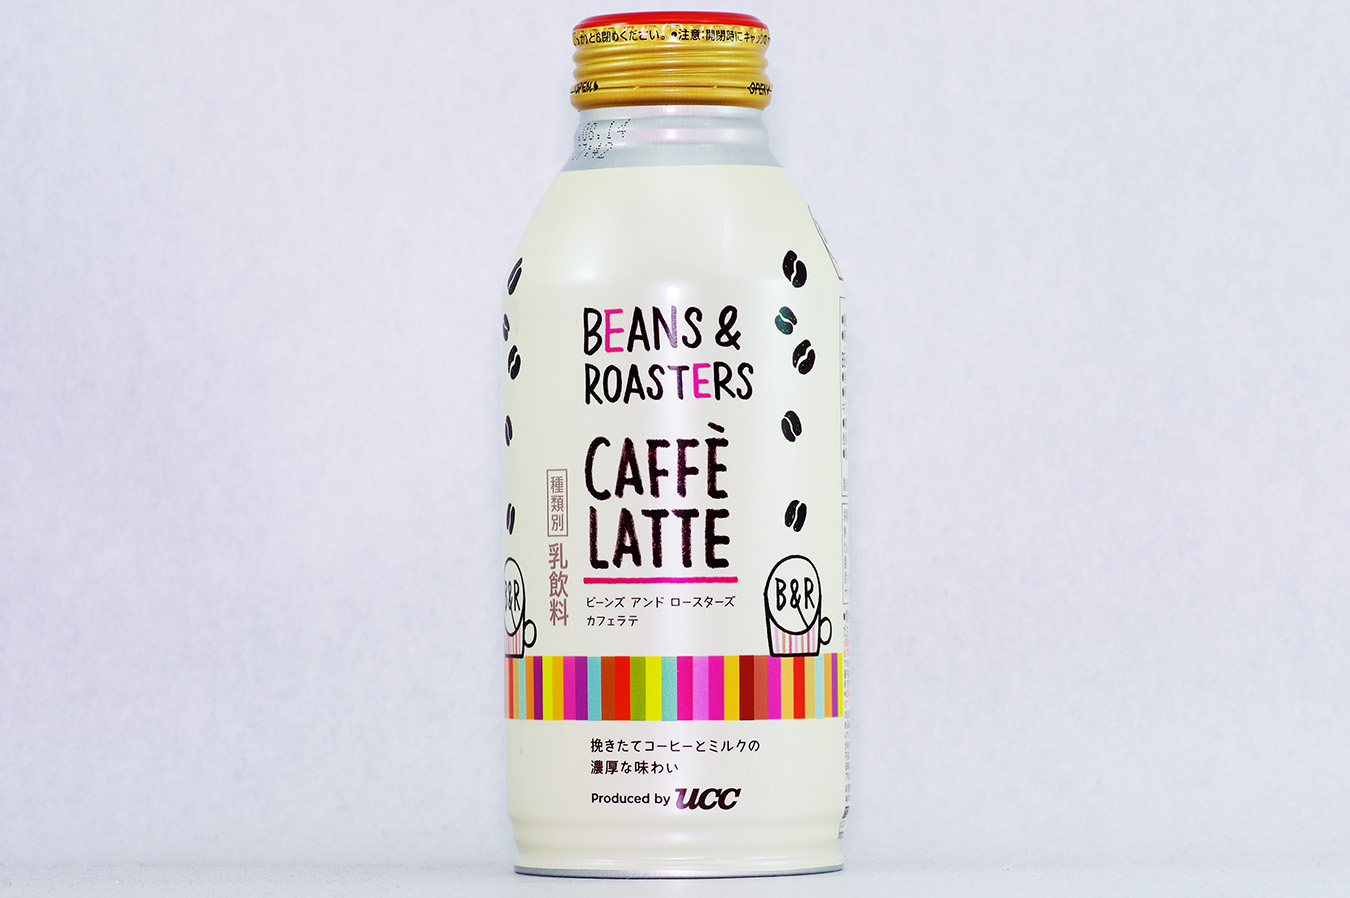 UCC BEANS & ROASTERS CAFFÈ LATTE 375gボトル缶 2016年9月